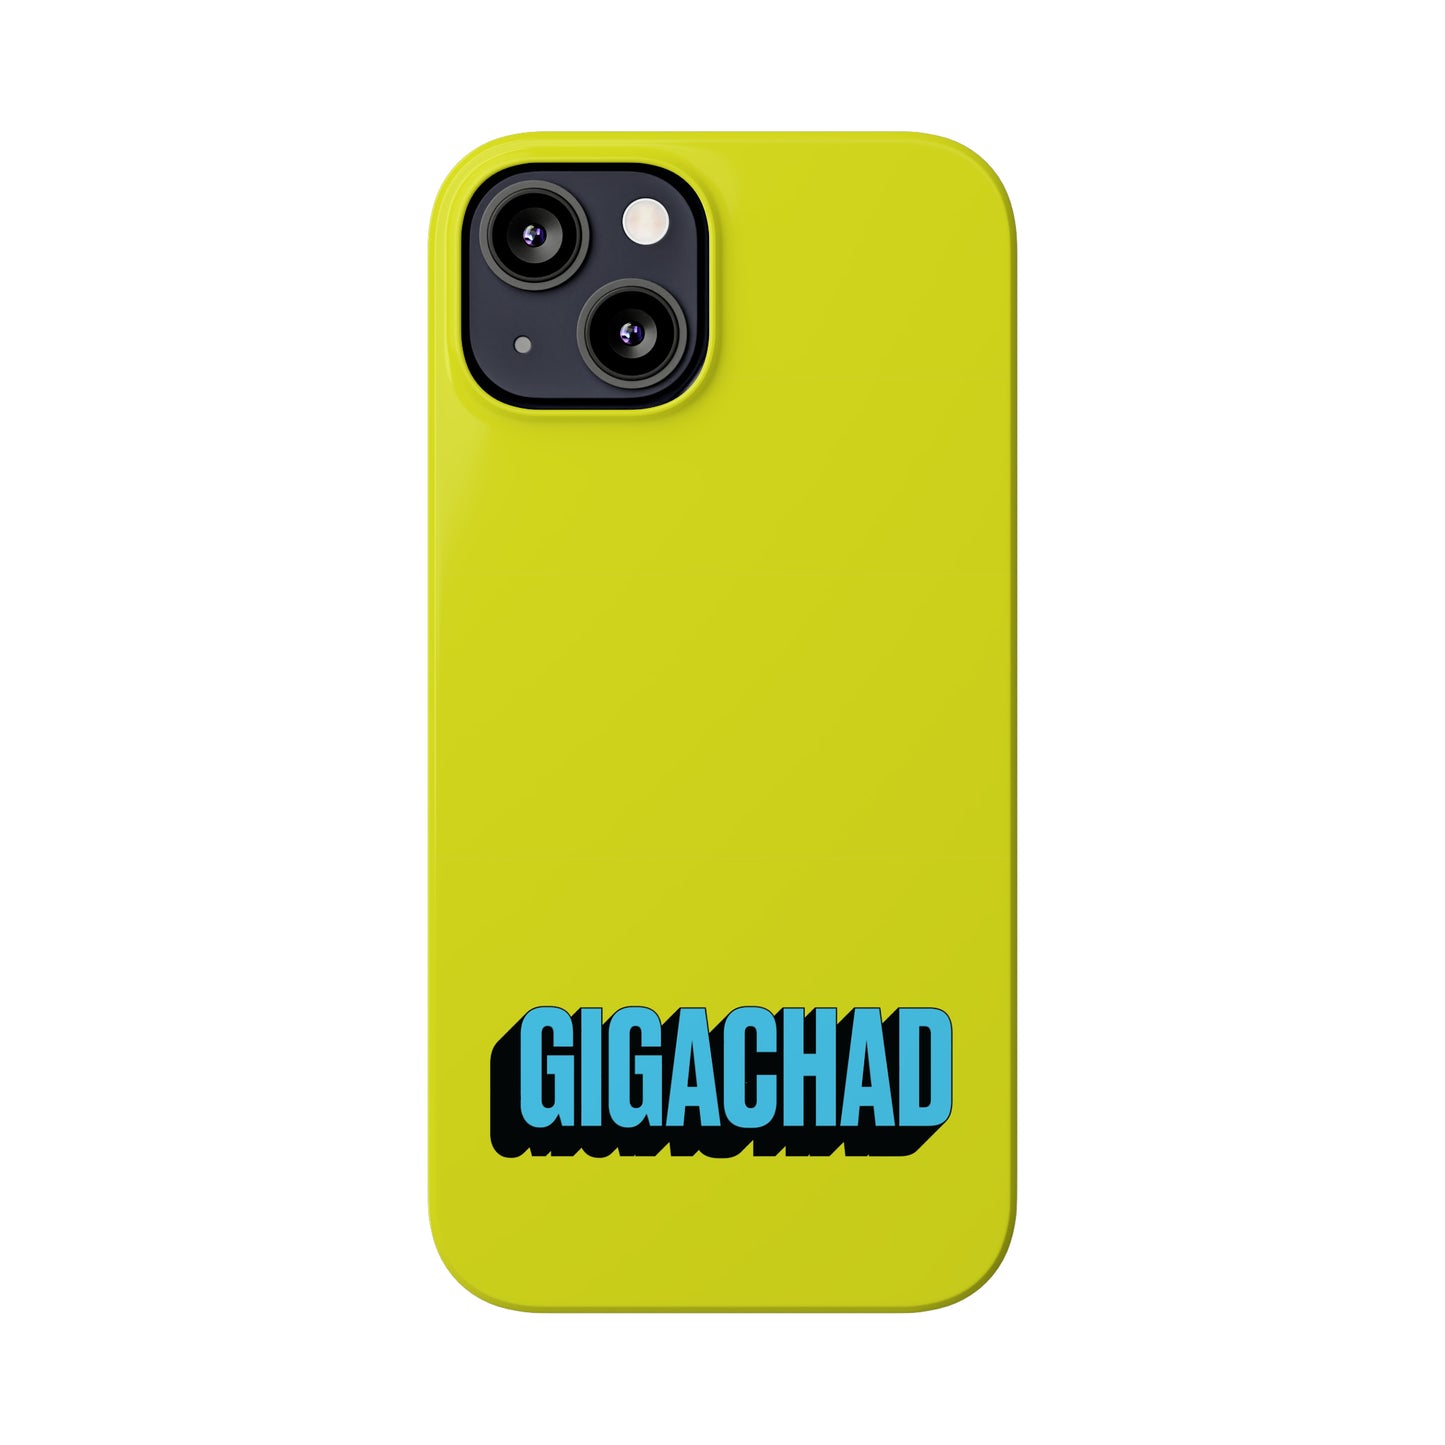 Gigachad | SYCU | Phone Cases